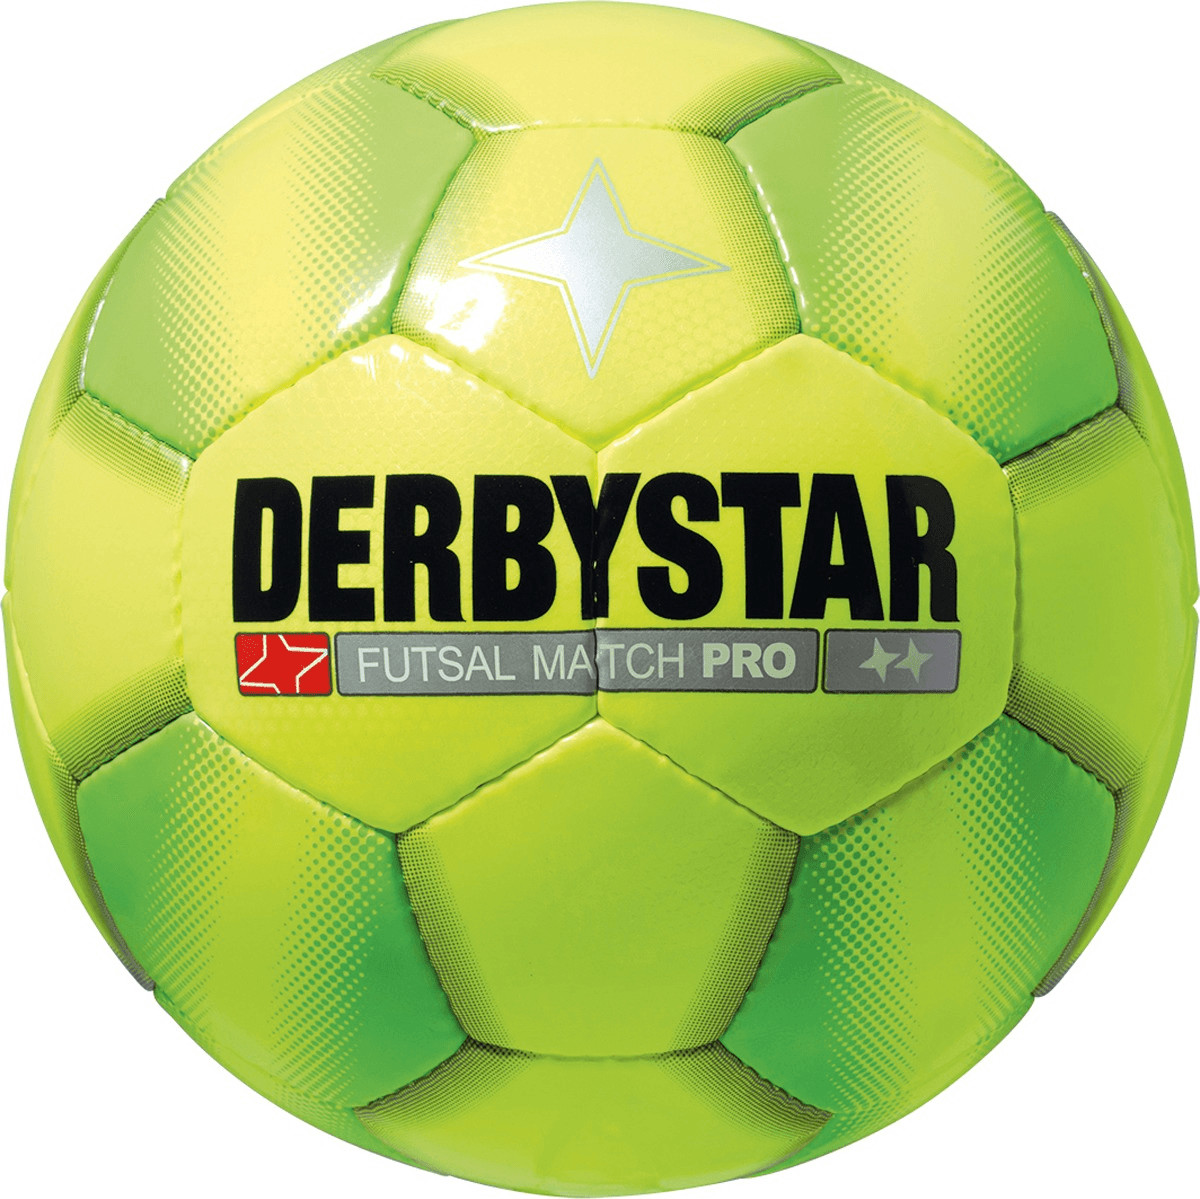 Derbystar Futsal Match Pro